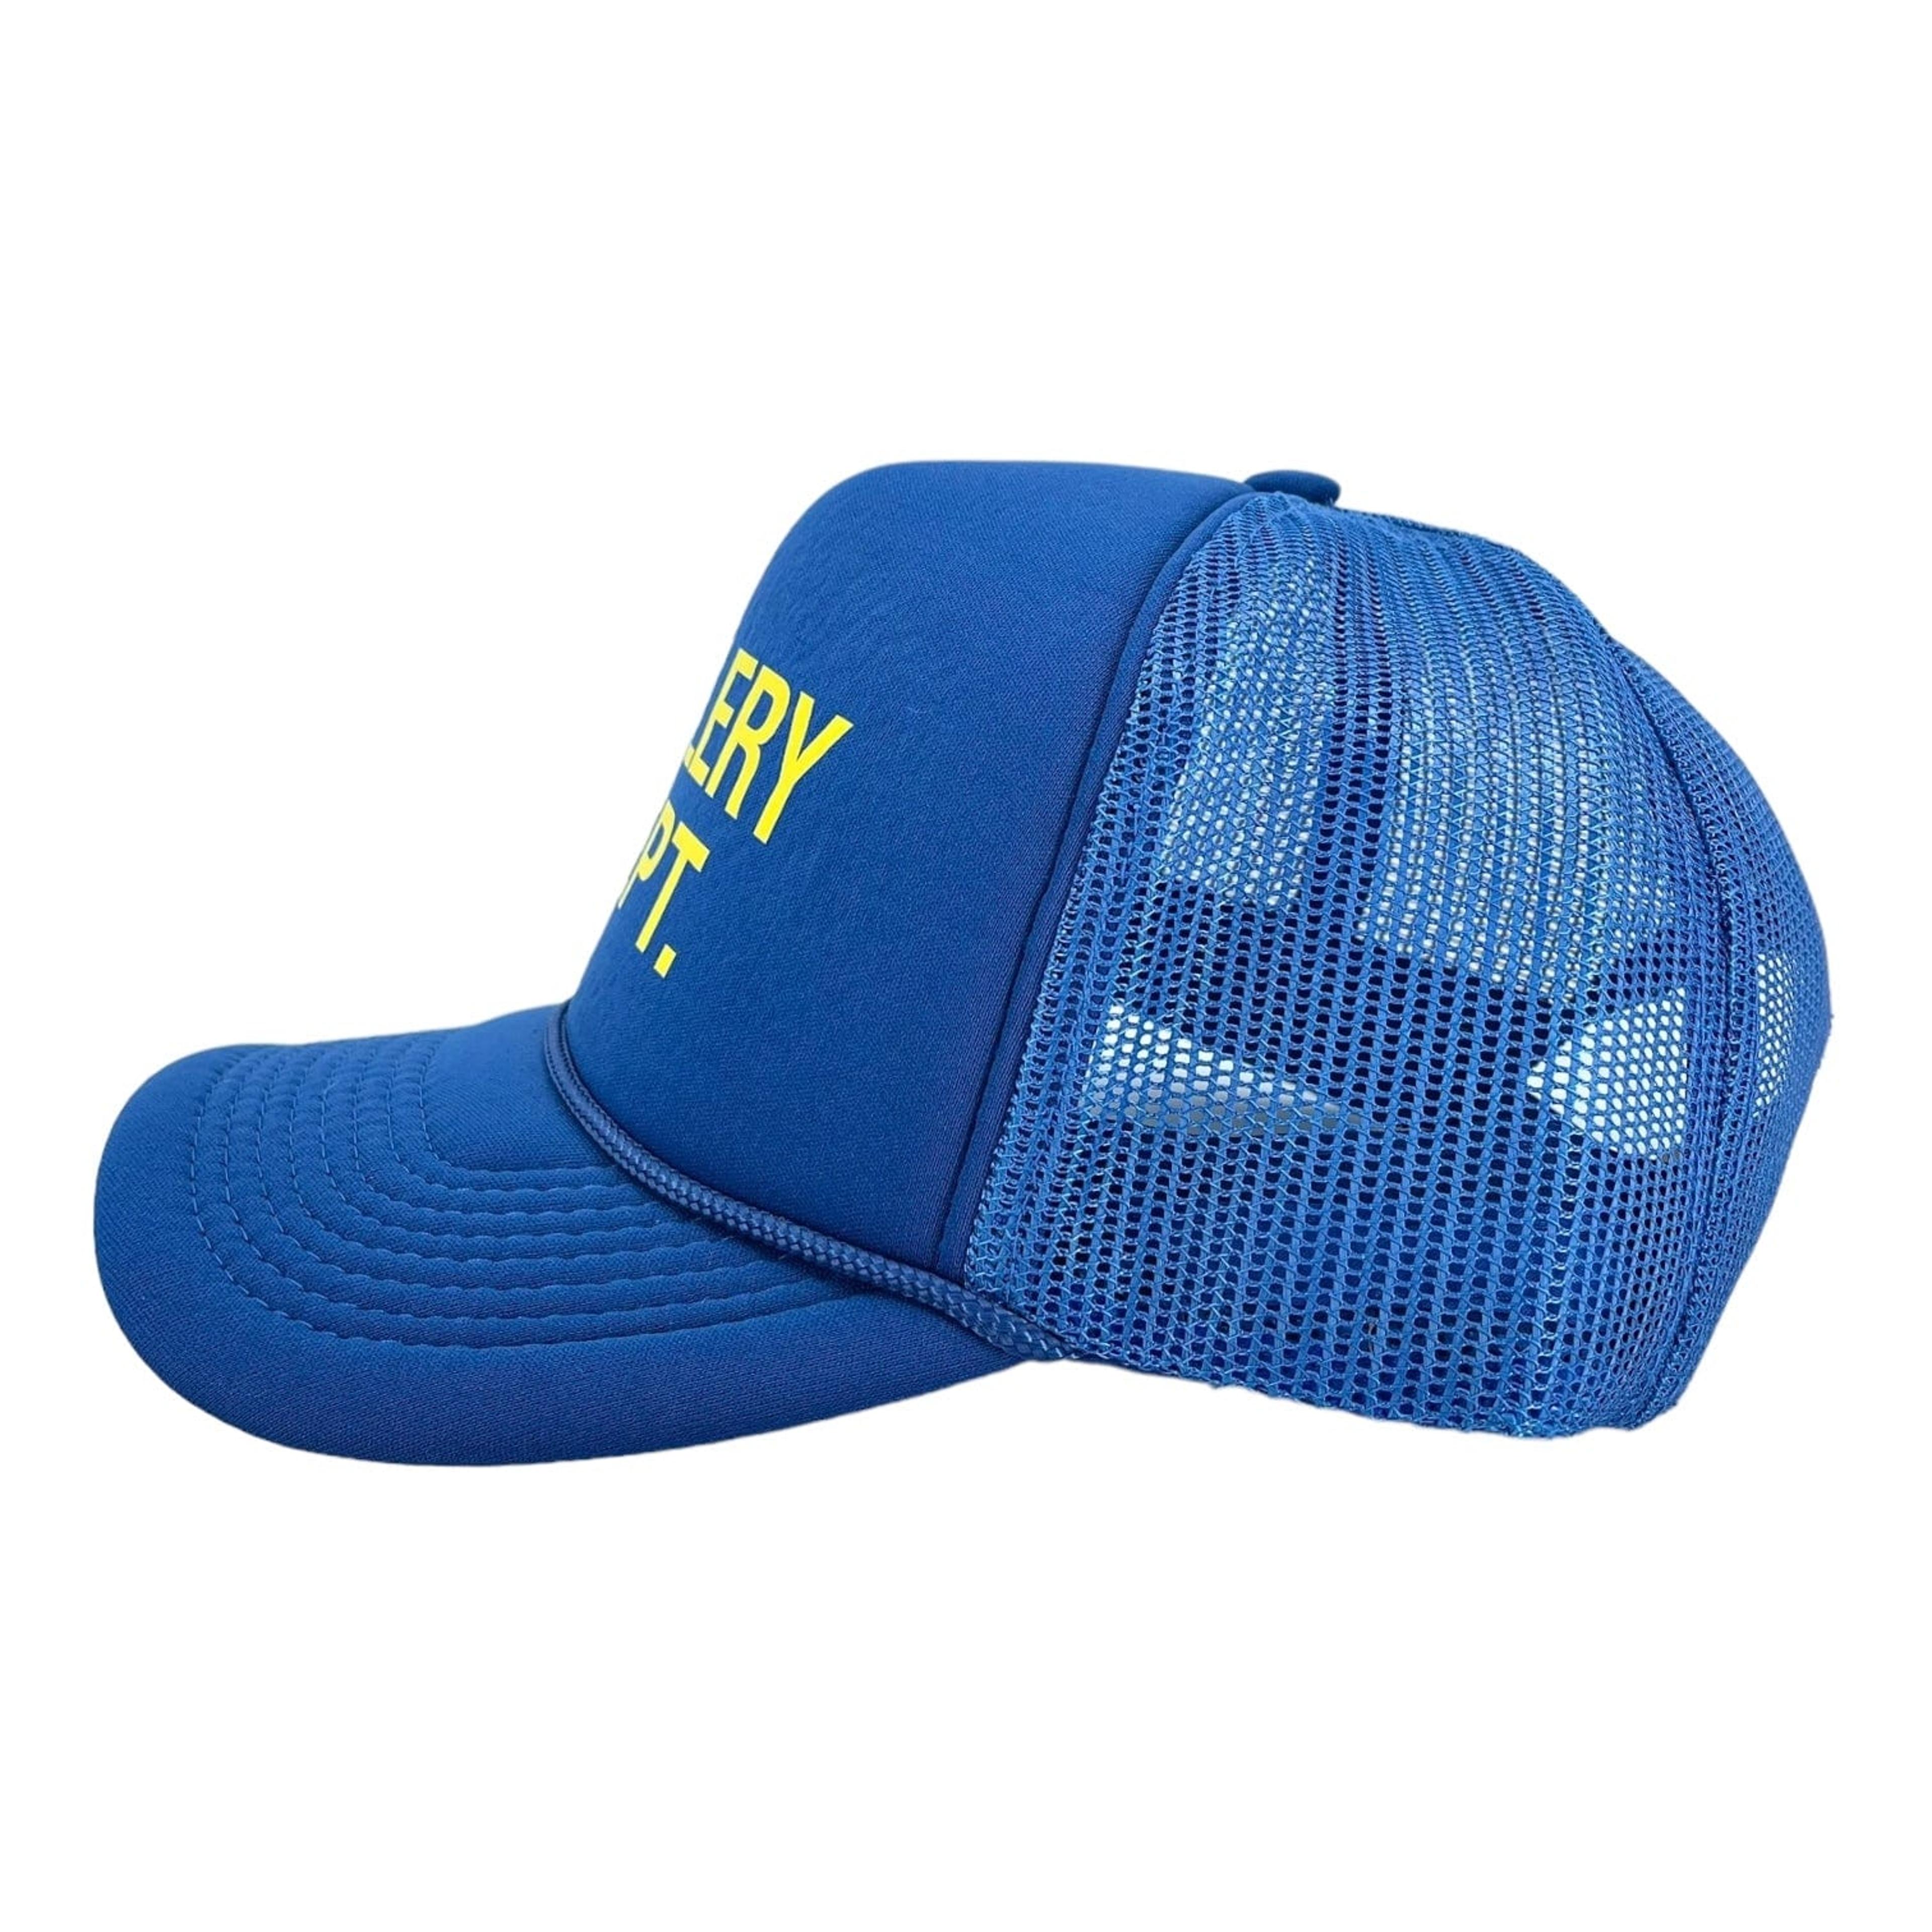 Alternate View 3 of Gallery Department Logo Trucker Hat Blue Yellow